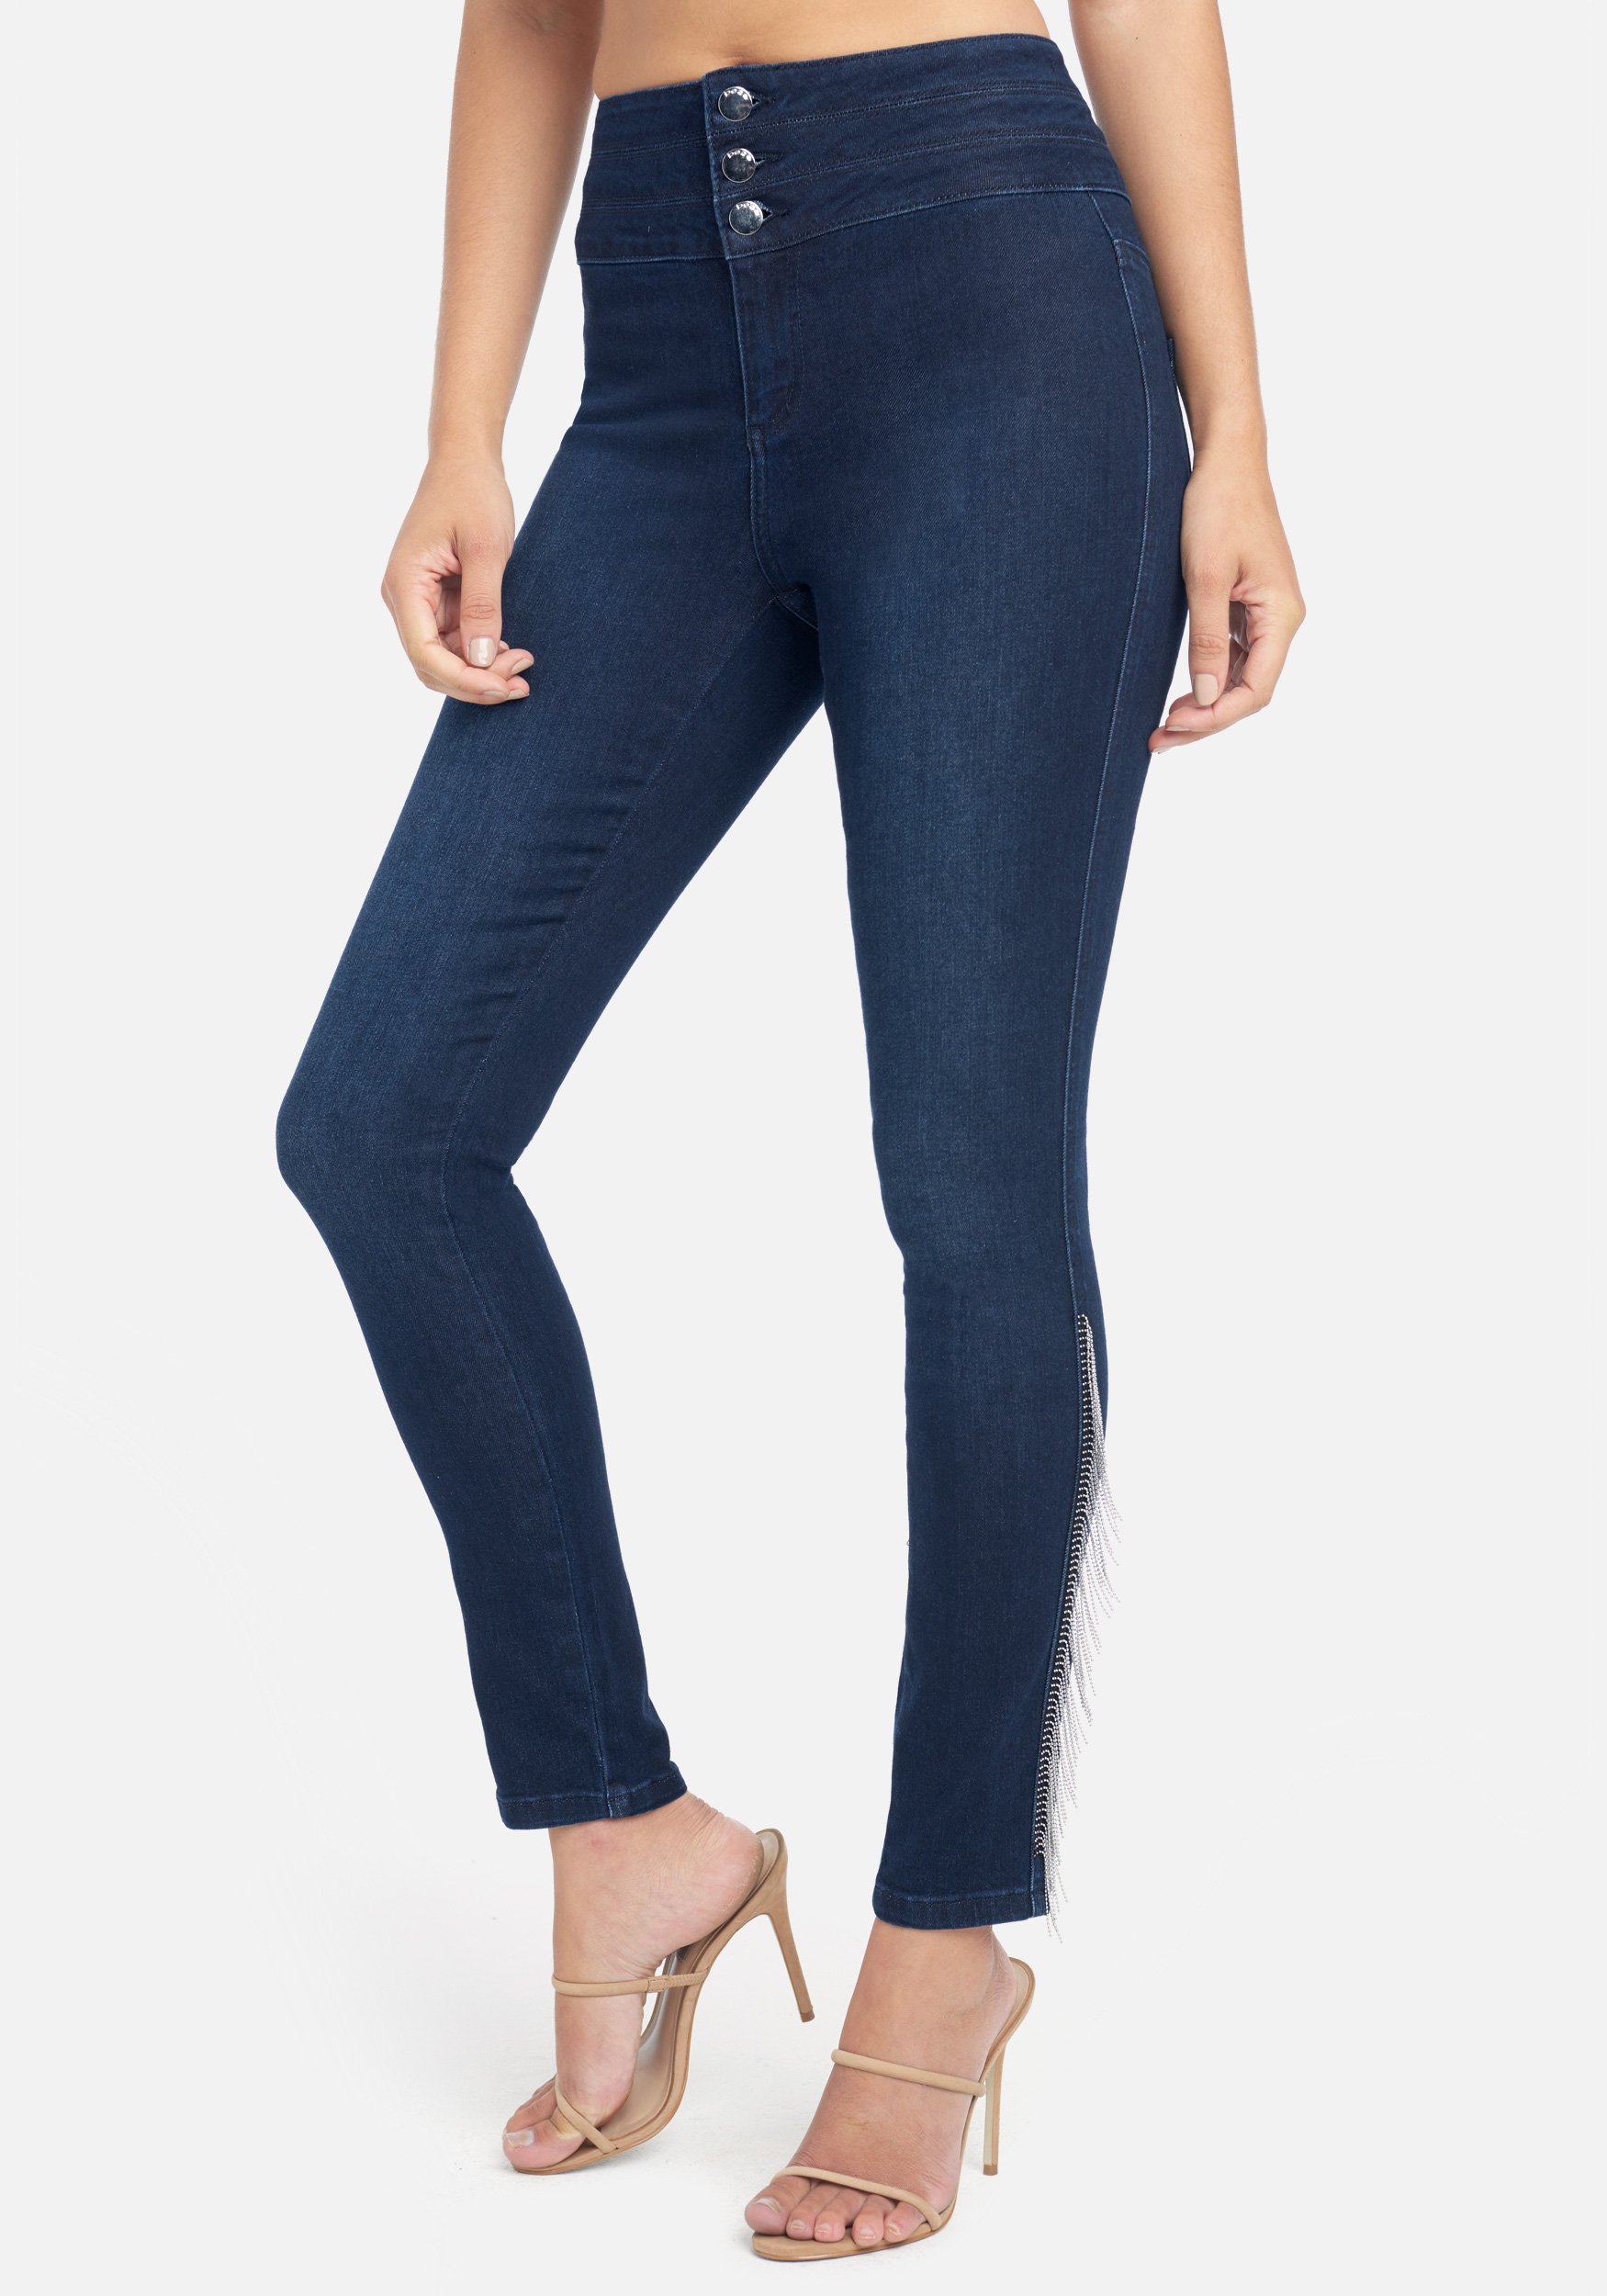 Bebe Women's Rhinestone Fringe Skinny Jeans, Size 26 in Dark Indigo Wash Cotton/Spandex